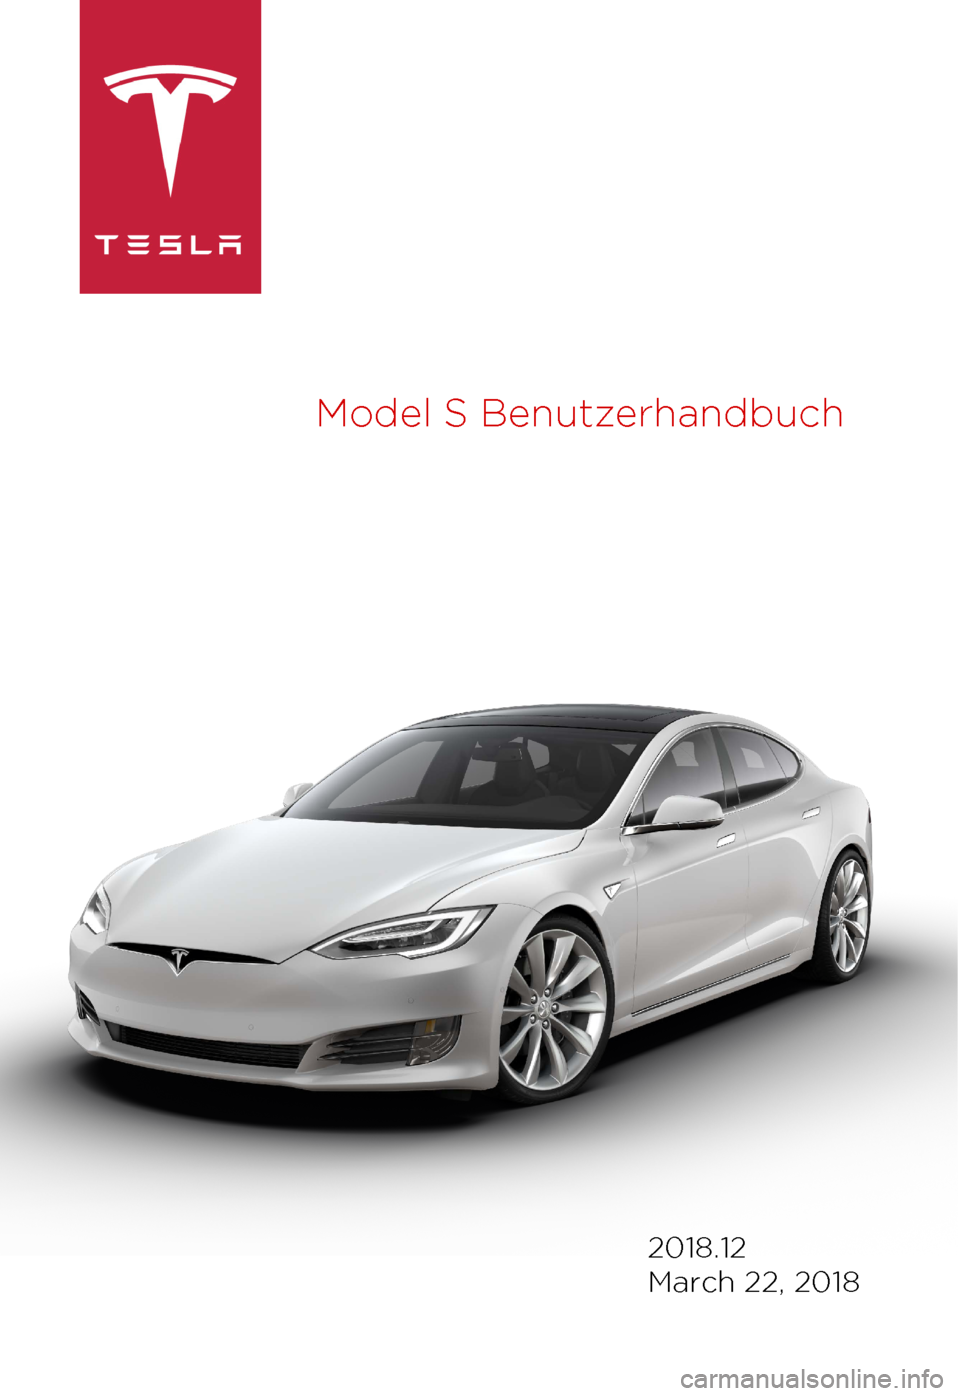 TESLA MODEL S 2018  Betriebsanleitung (in German) Model 
S Benutzerhandbuch 2018.12
March 22, 2018 